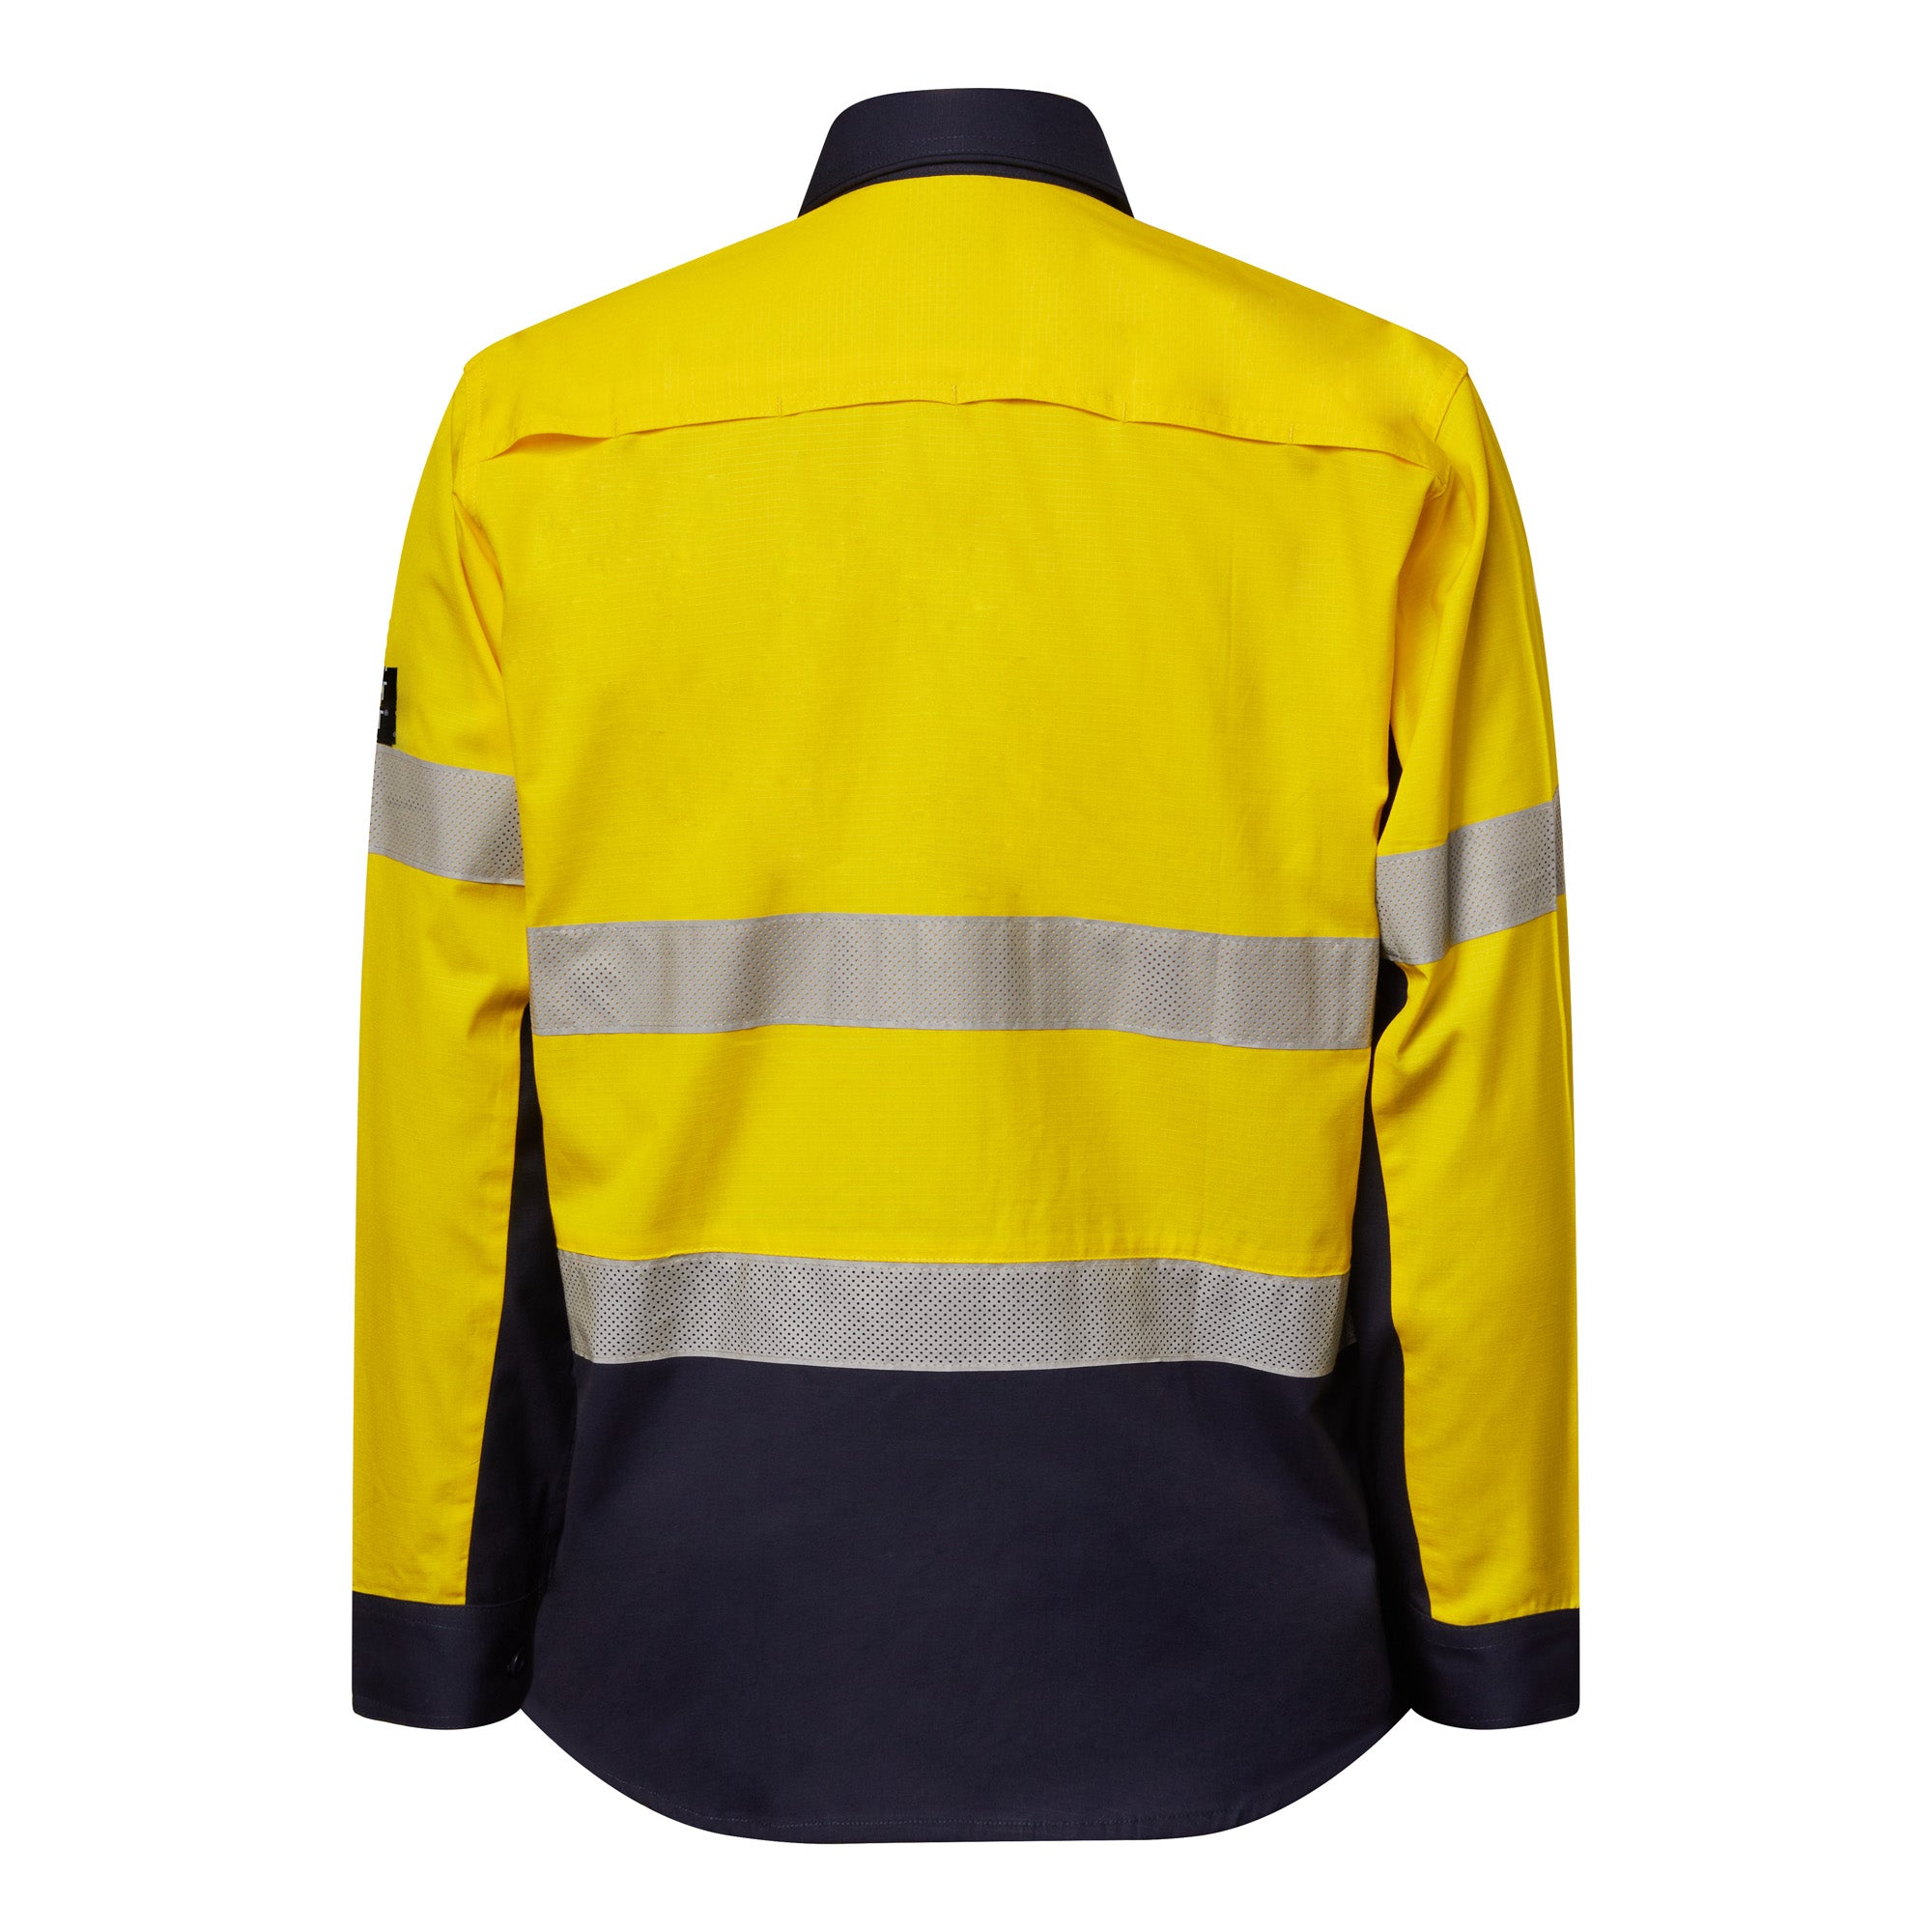 WS6068 custom reflective ripstop tradie work shirt - Yellow back